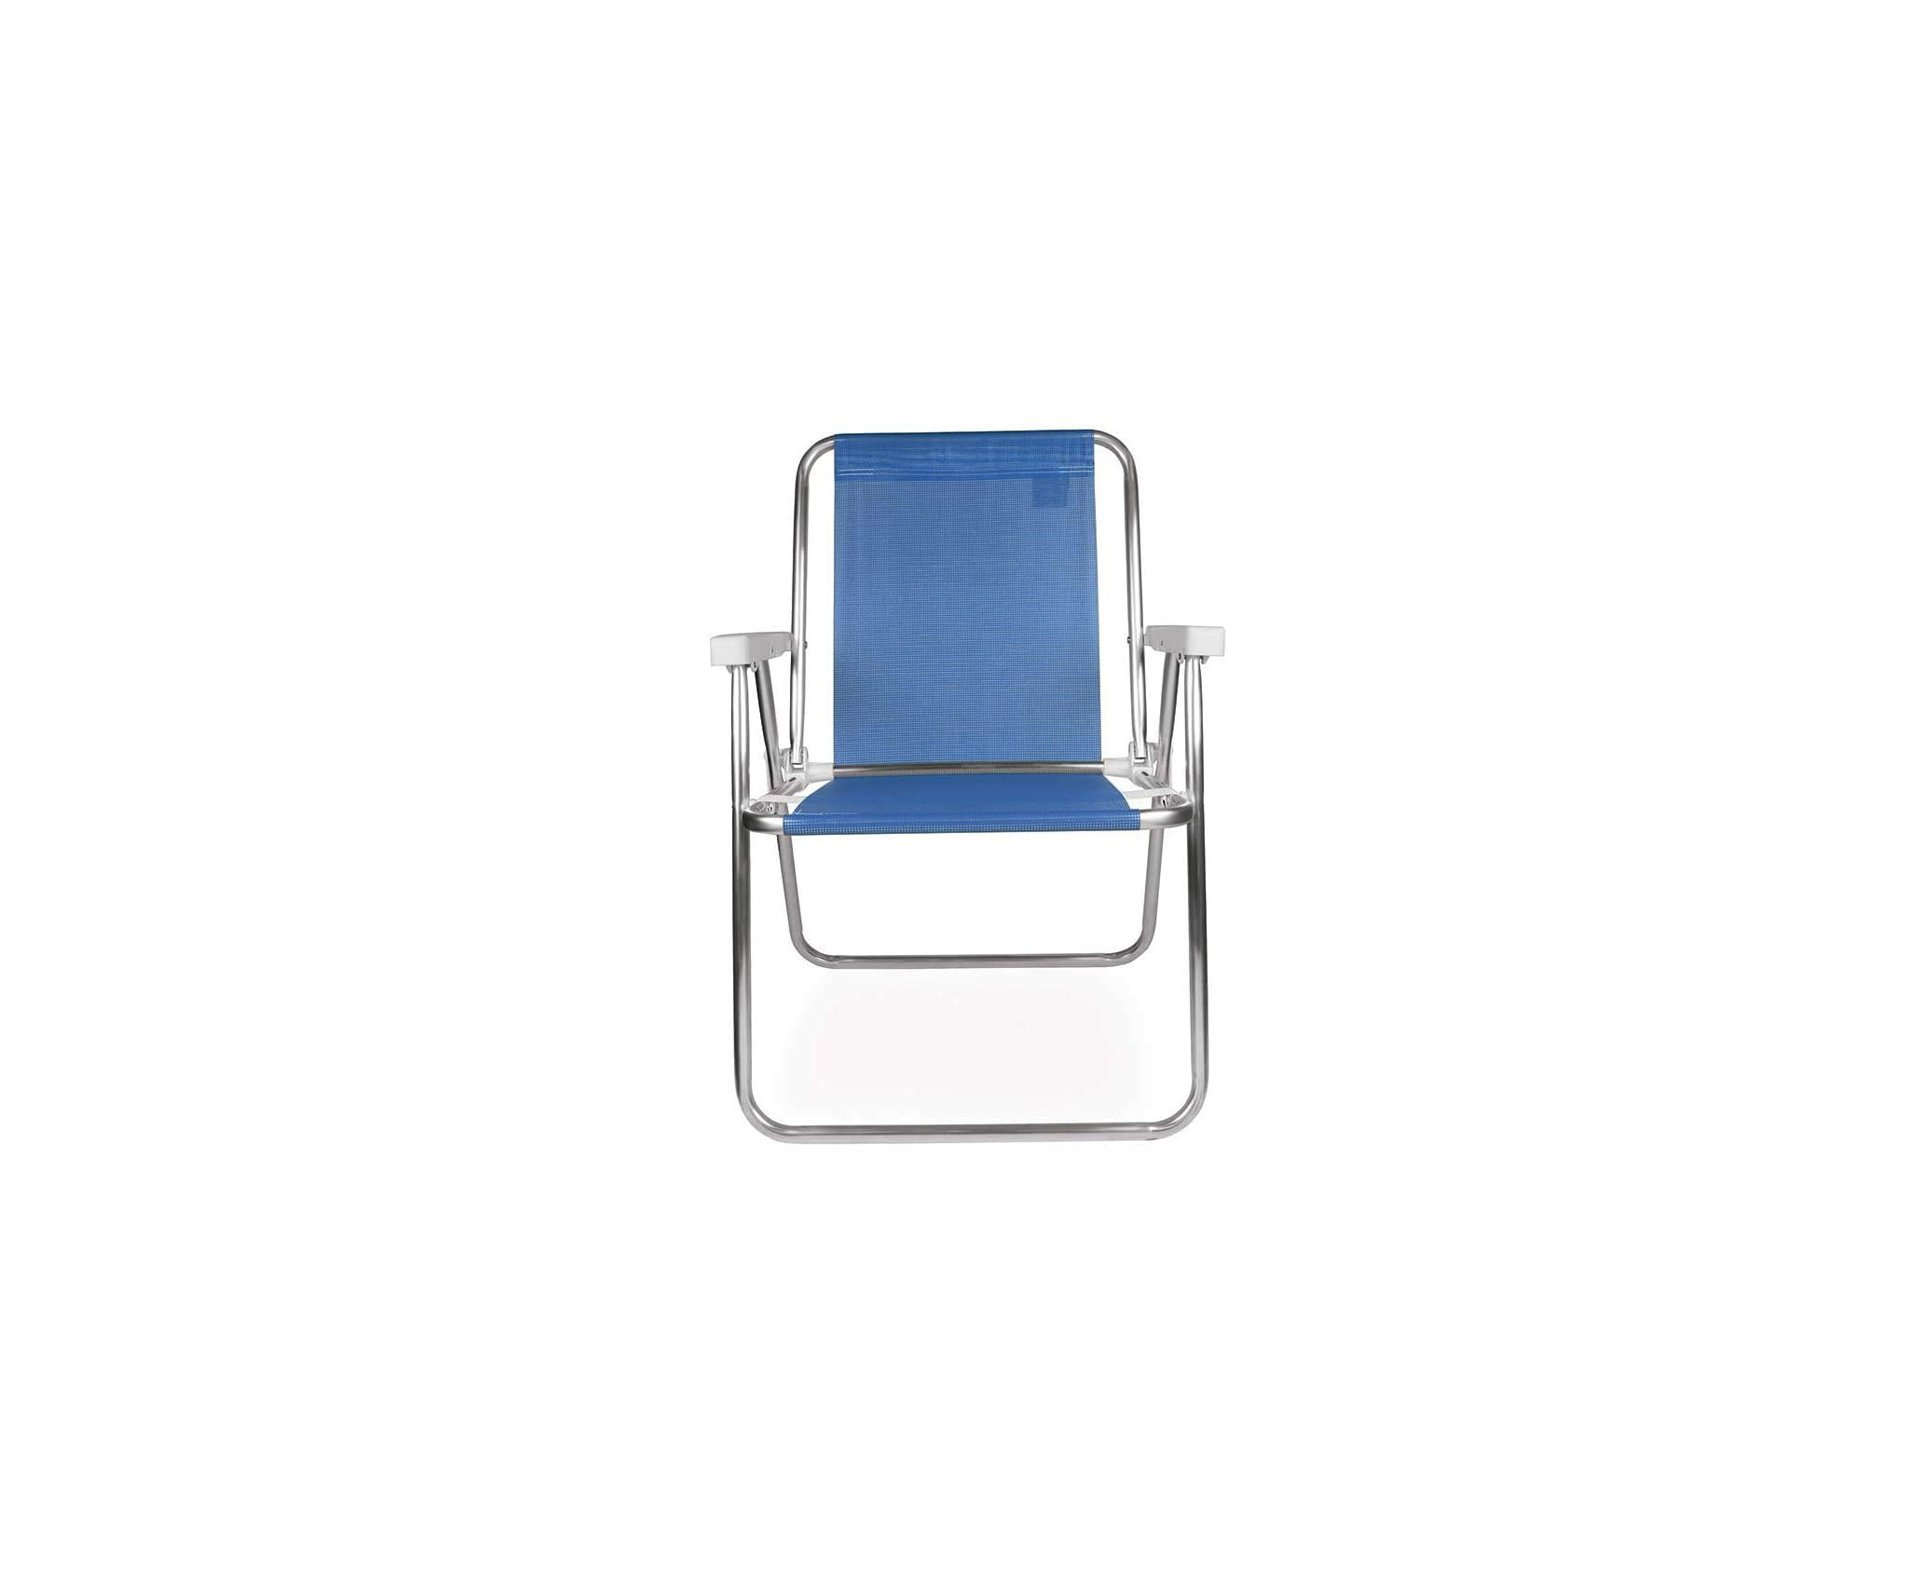 Cadeira Alta Alumínio Sannet Azul - Mor